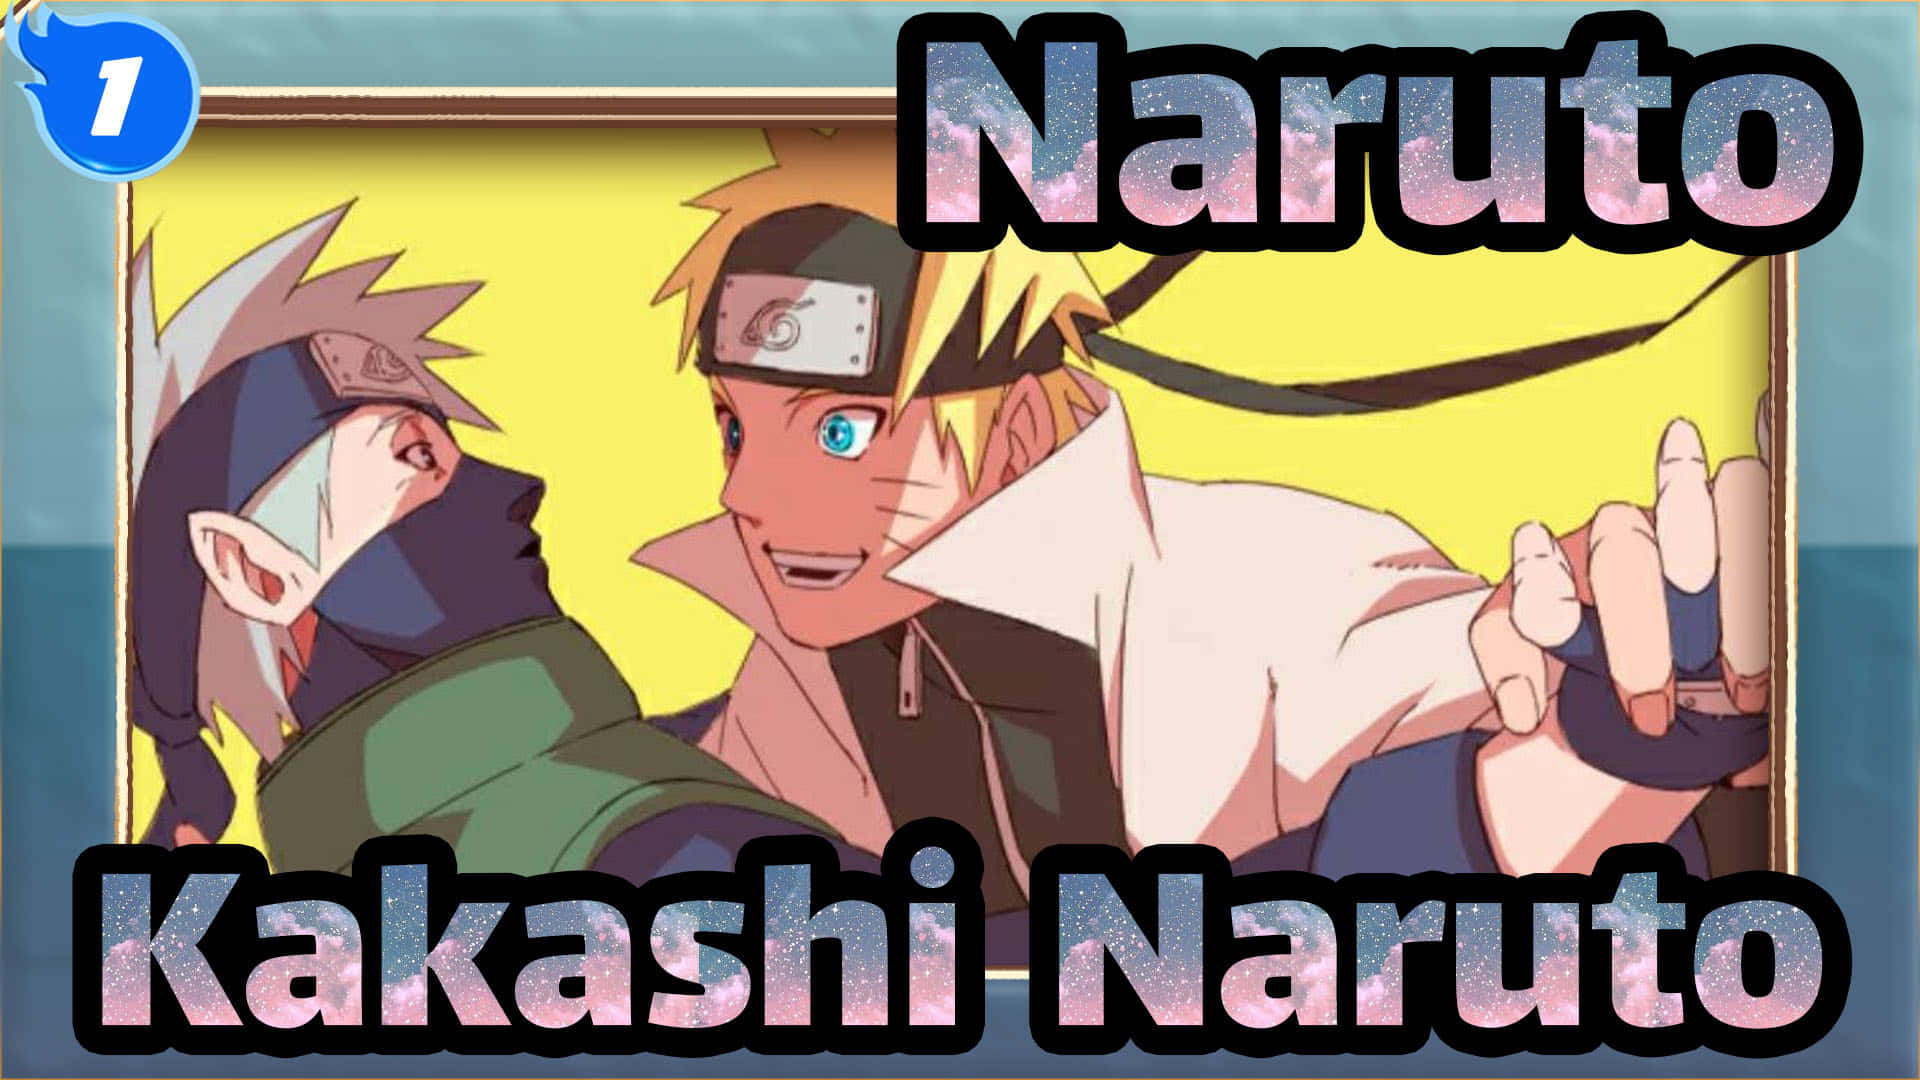 Kakashi and Naruto bonding in a captivating anime moment Wallpaper